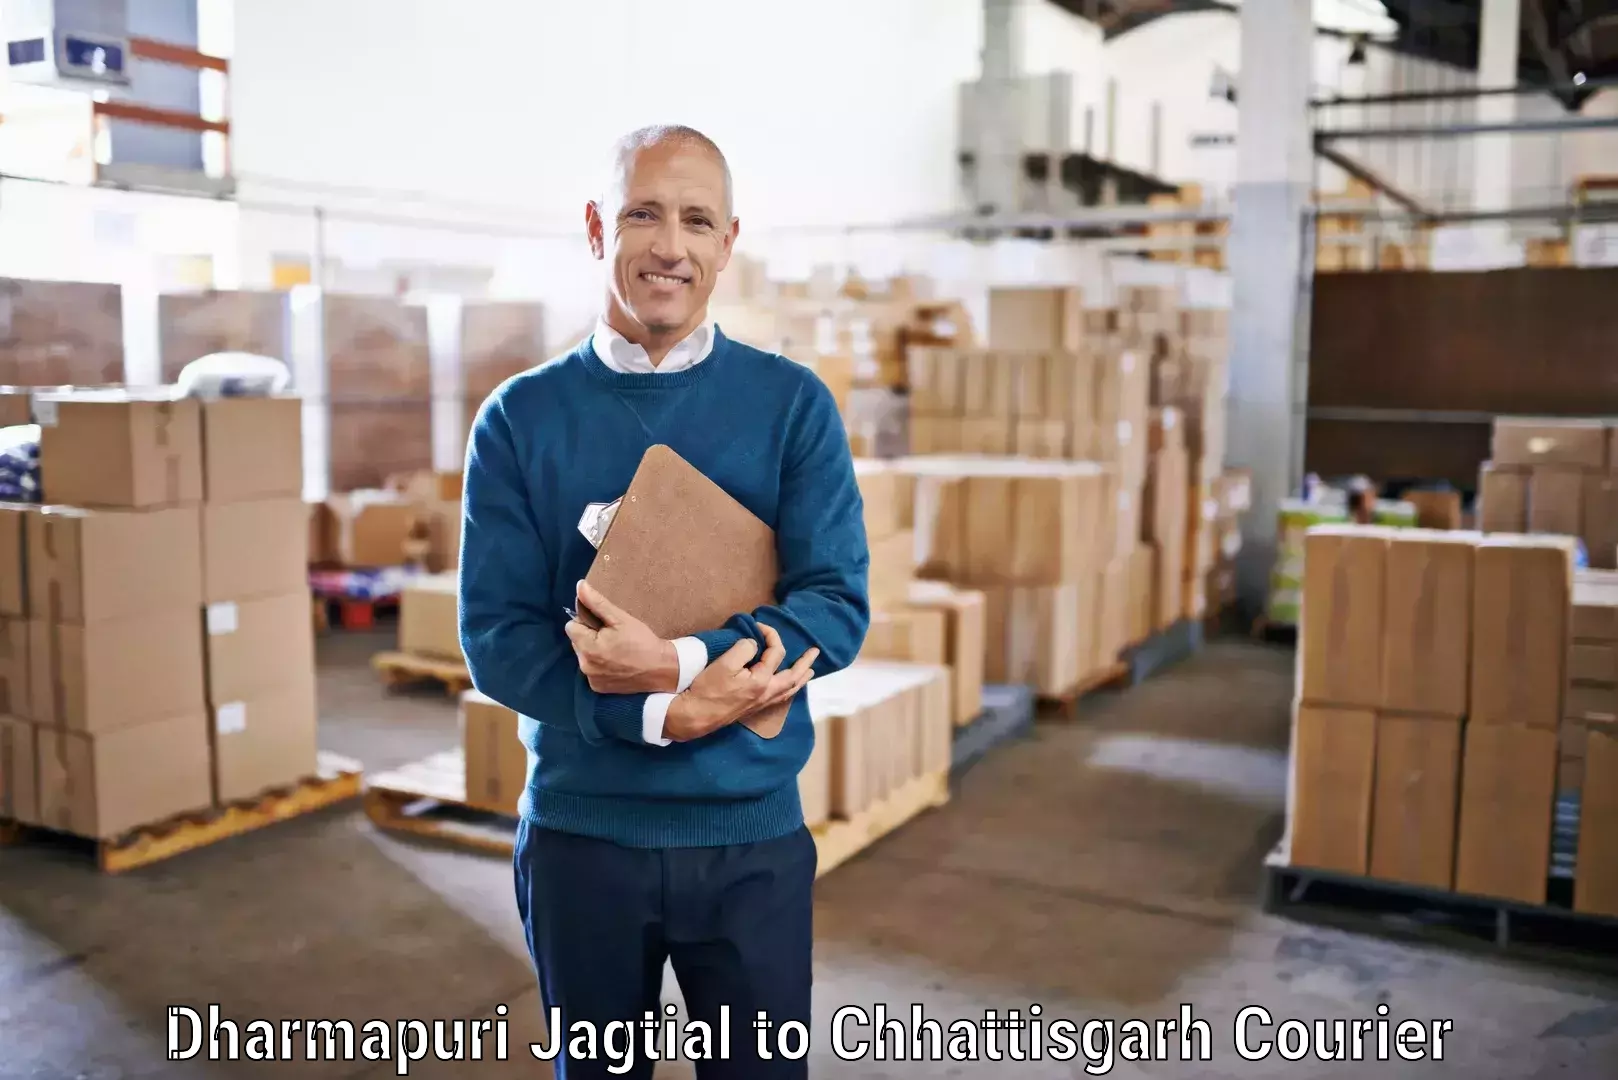 Courier service innovation Dharmapuri Jagtial to Ramanujganj